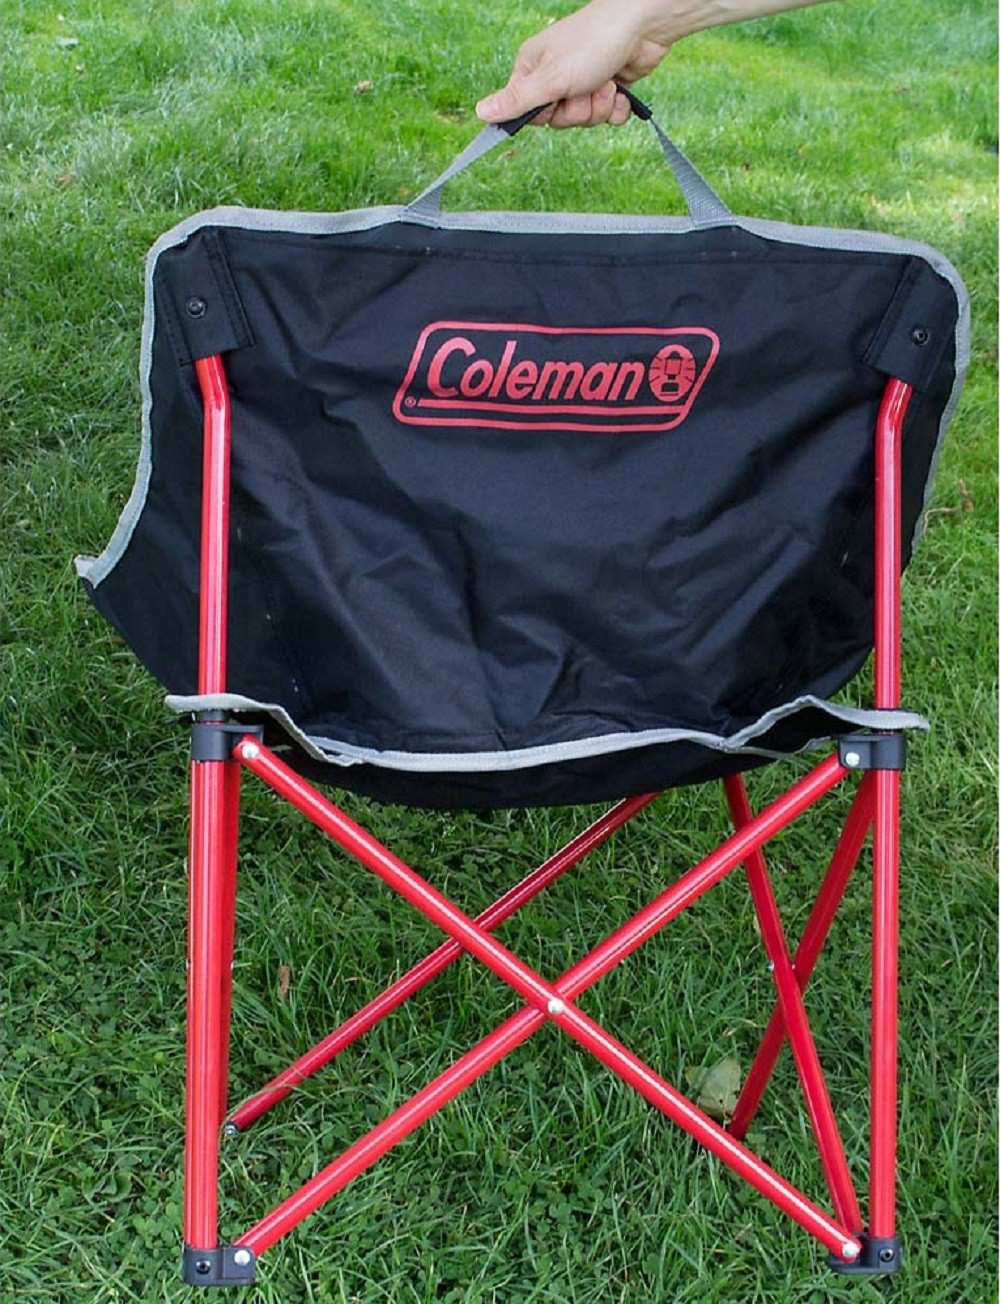 Kickback Chair Festival Coleman